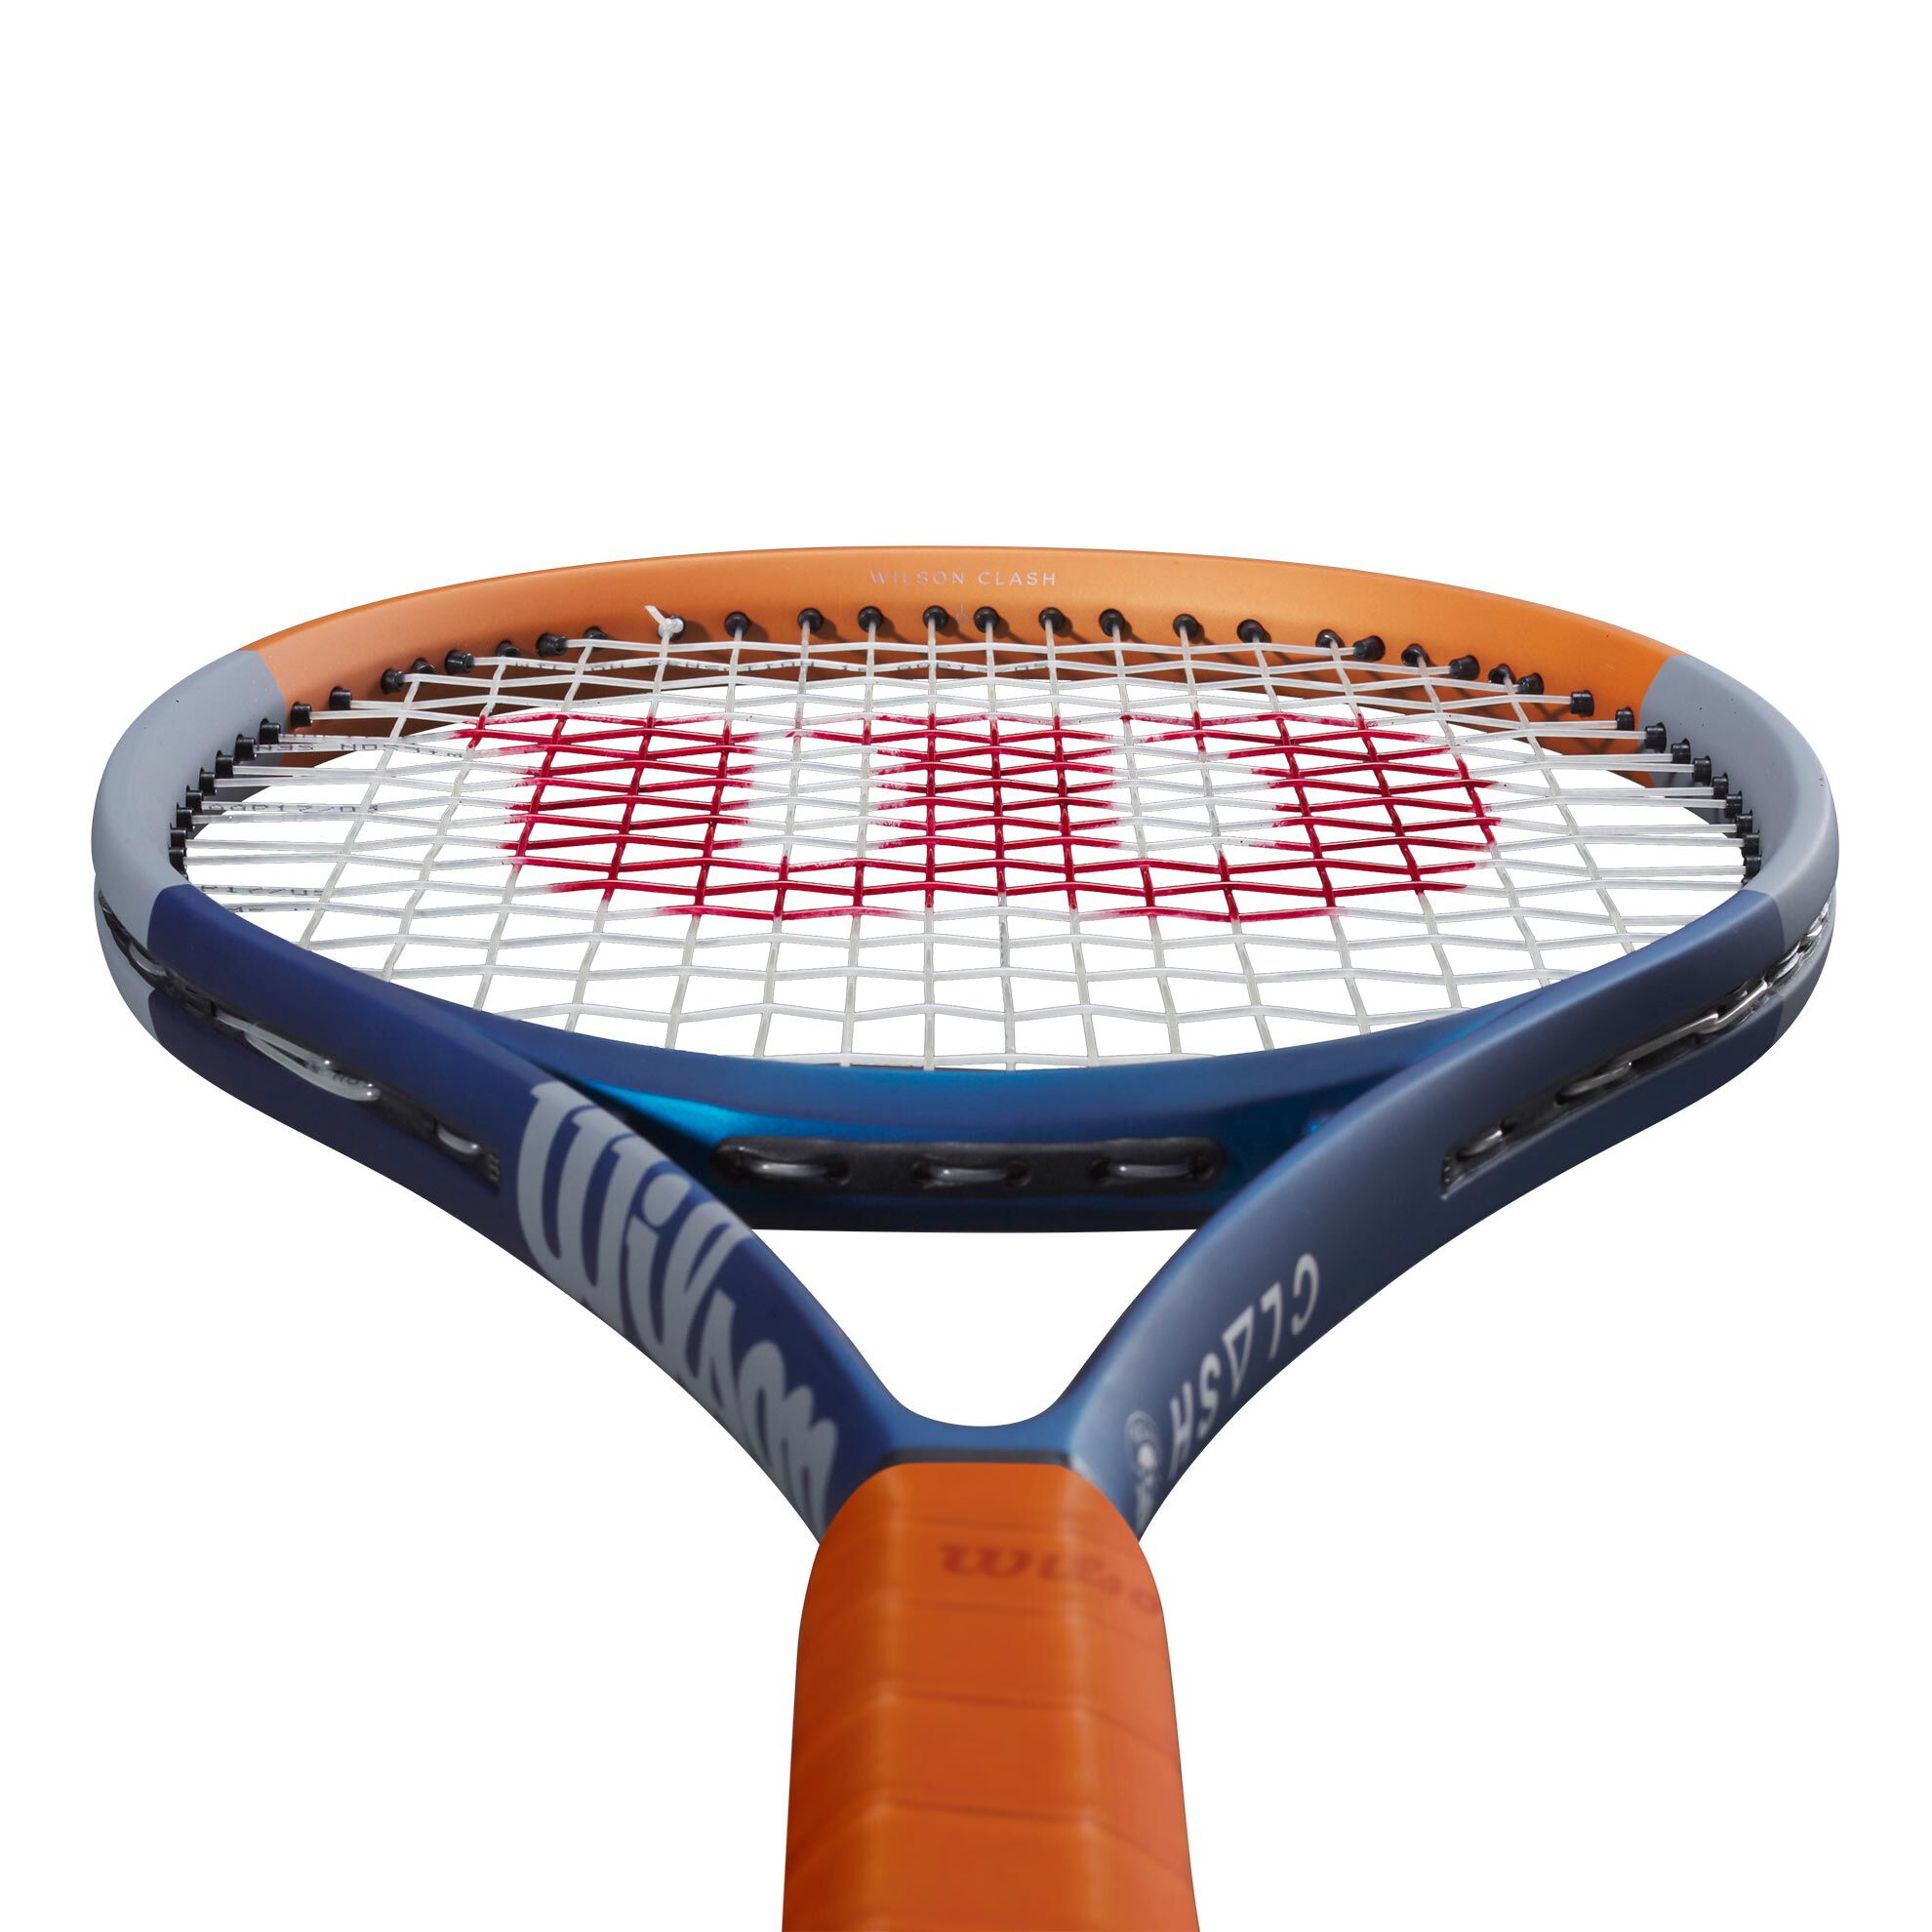 New WILSON Clash 100 Roland Garros Tennis Racquet 4 1/2 Racket LTD EDITION 2020 